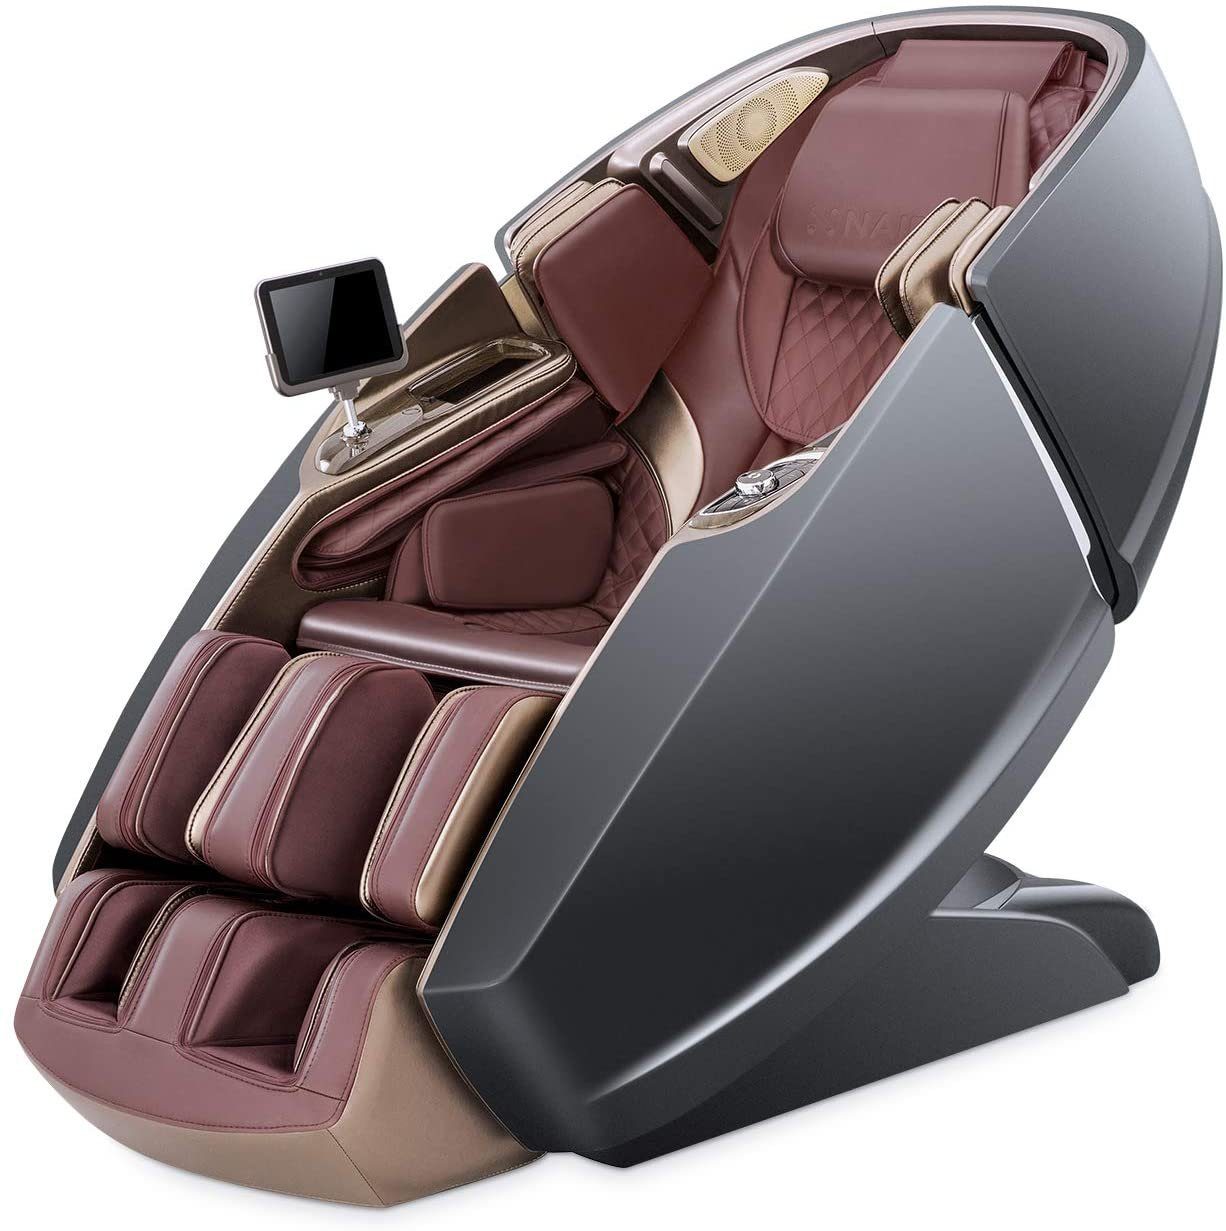 NAIPO Massagesessel, 3D High-End Massagestuhl mit Tablet, Raumkapsel-Design